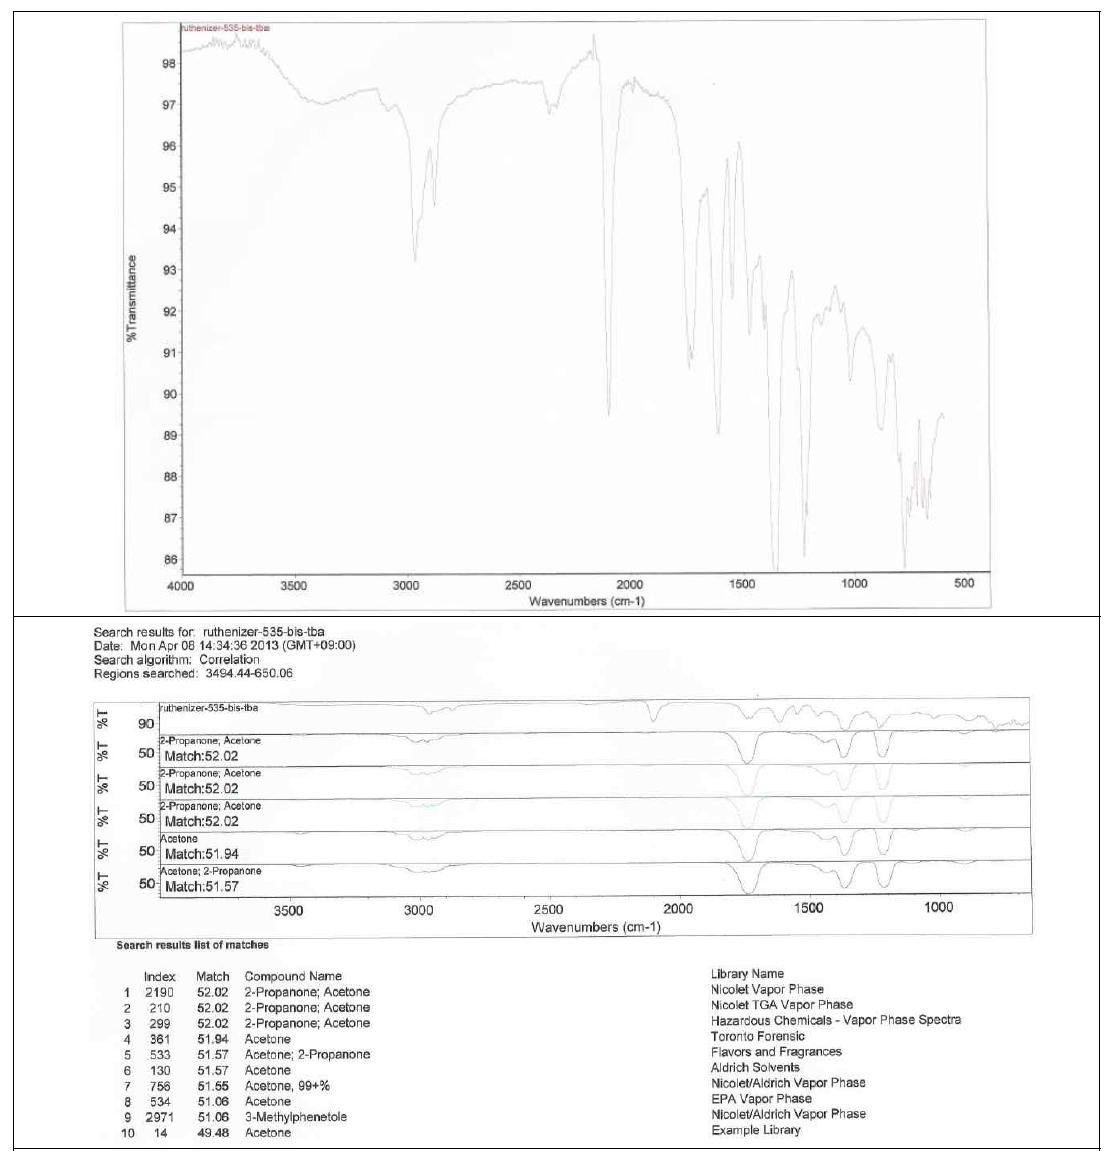 Ruthenizer 535-bisTBA (N719)제품 FT-IR Spectrometer 분석결과